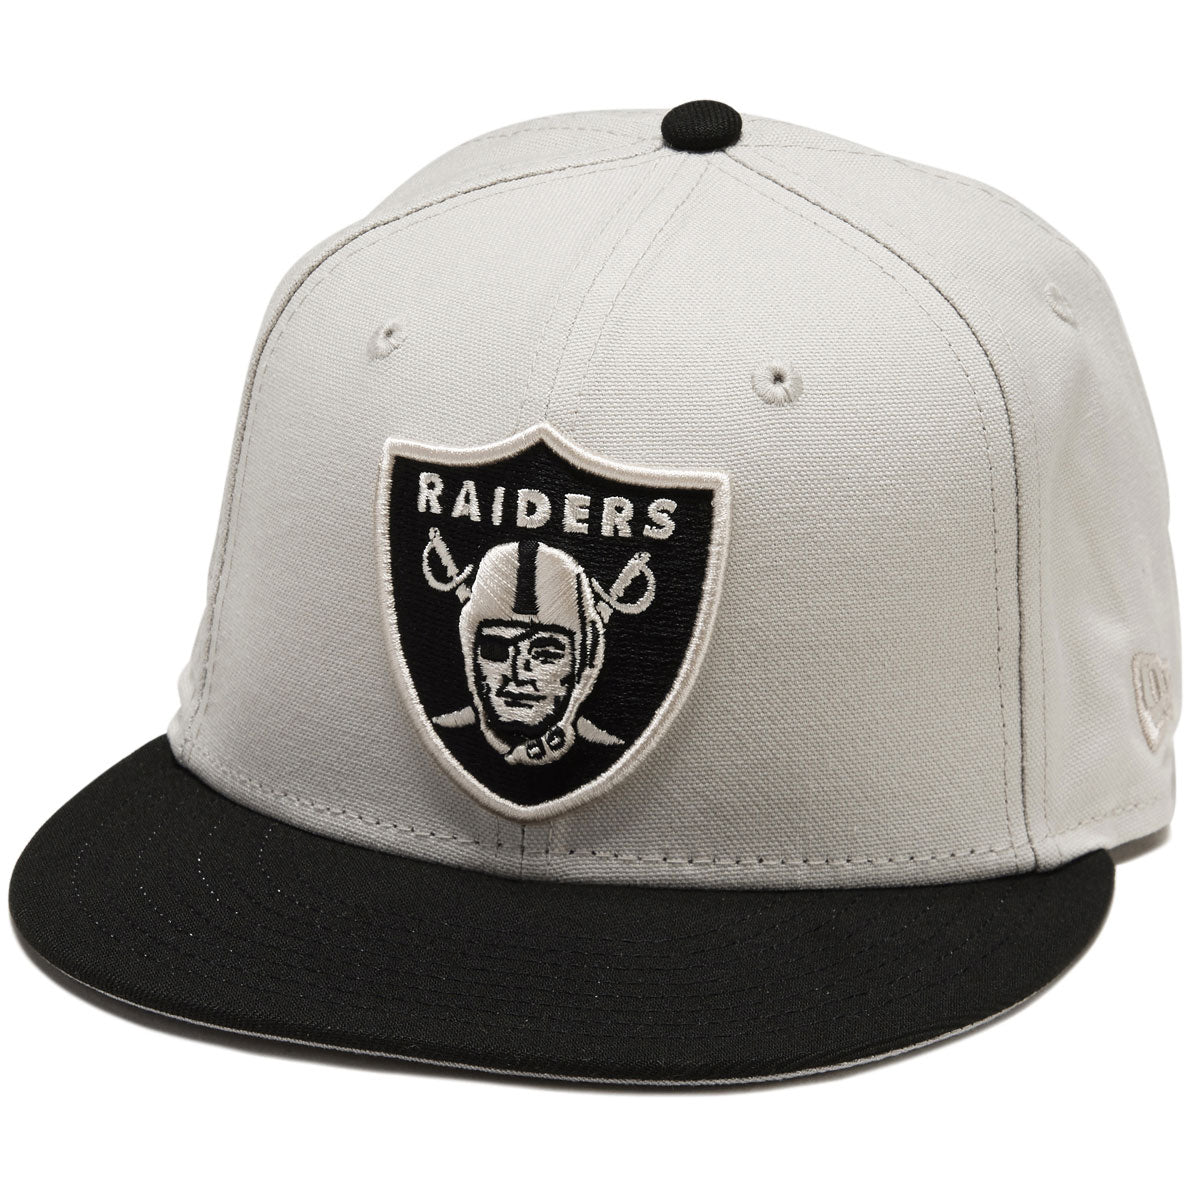 New Era 5950 Two-tone Stone Hat - Las Vegas Raiders image 1